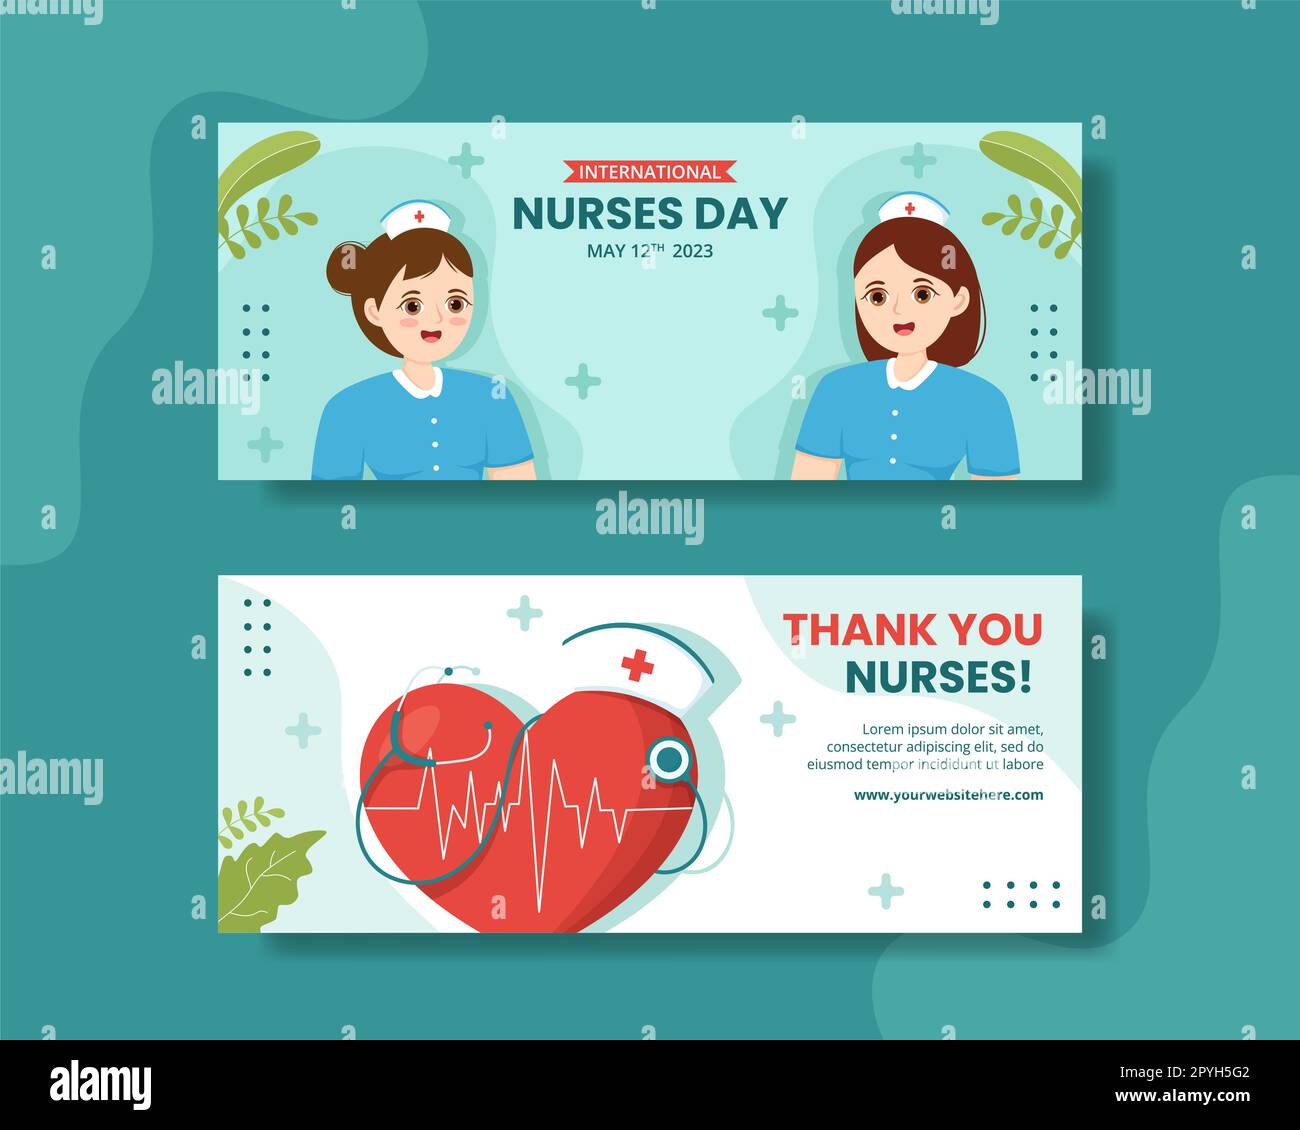 International Nurses Day Horizontal Banner Cartoon Hand Drawn Templates Background Illustration Stock Photo